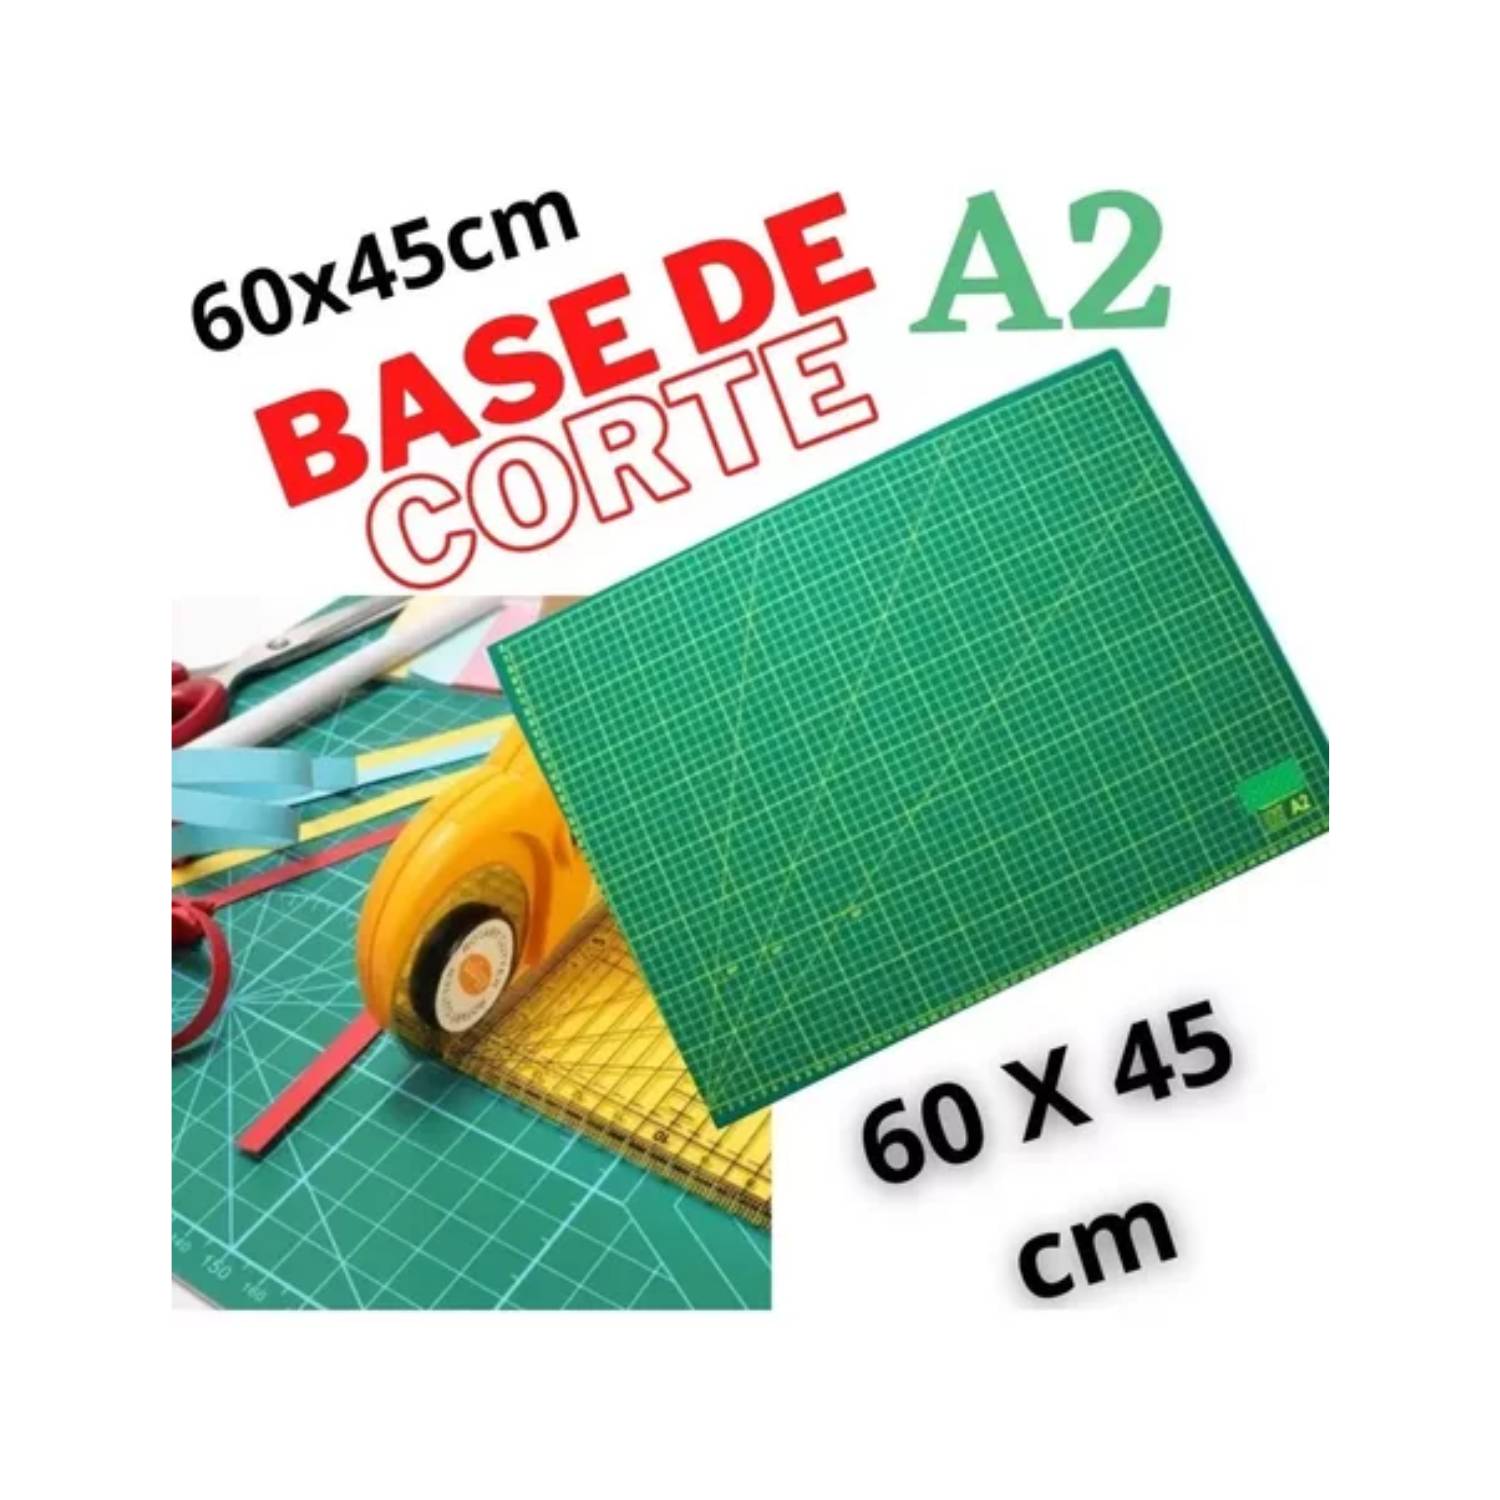 Base De Corte Autorregenerable A2 Multiuso - 60x45cm GENERICO